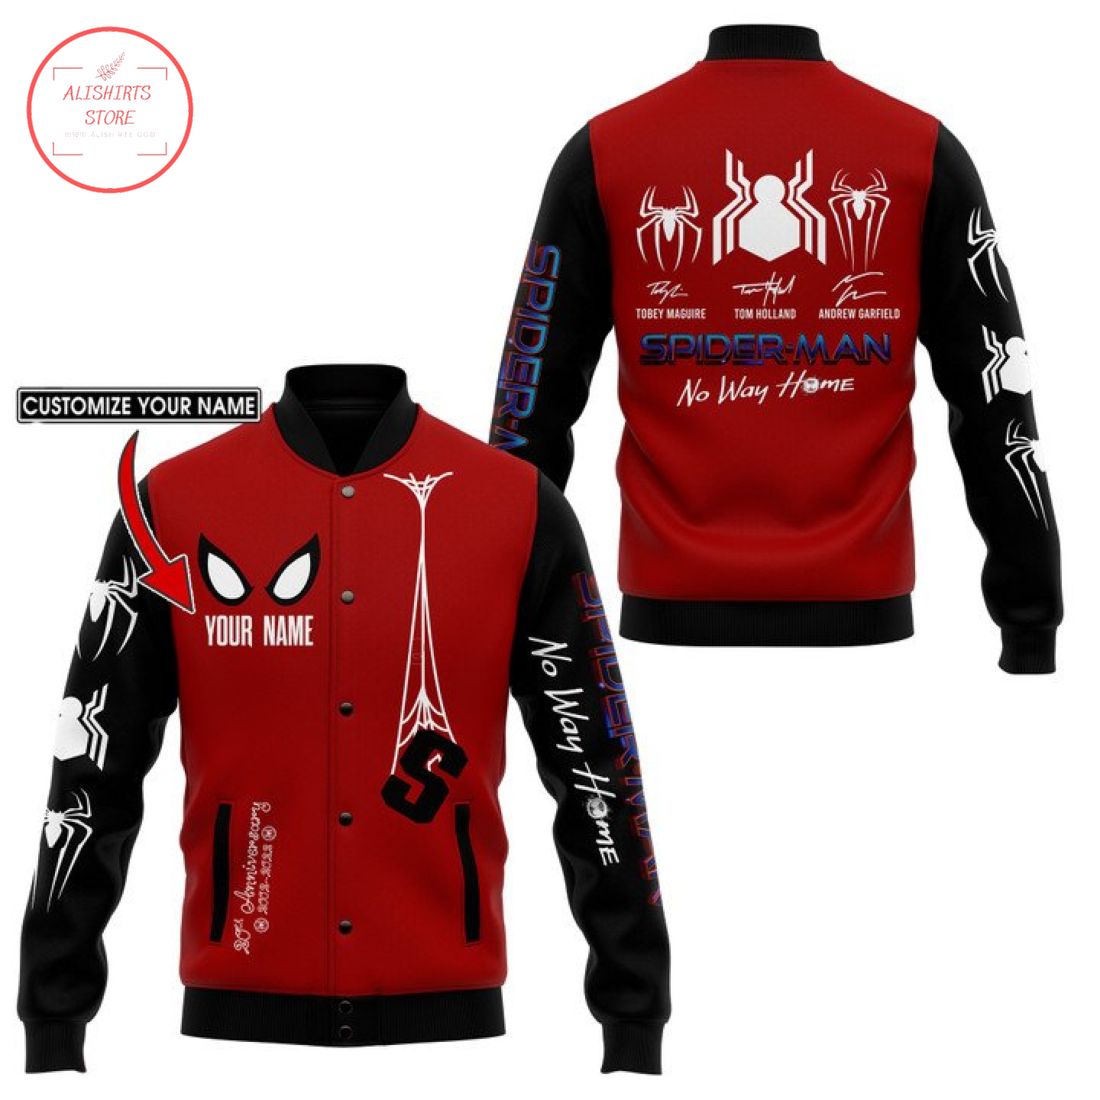 Spider-Man No Way Home Personalized Baseball Jacket